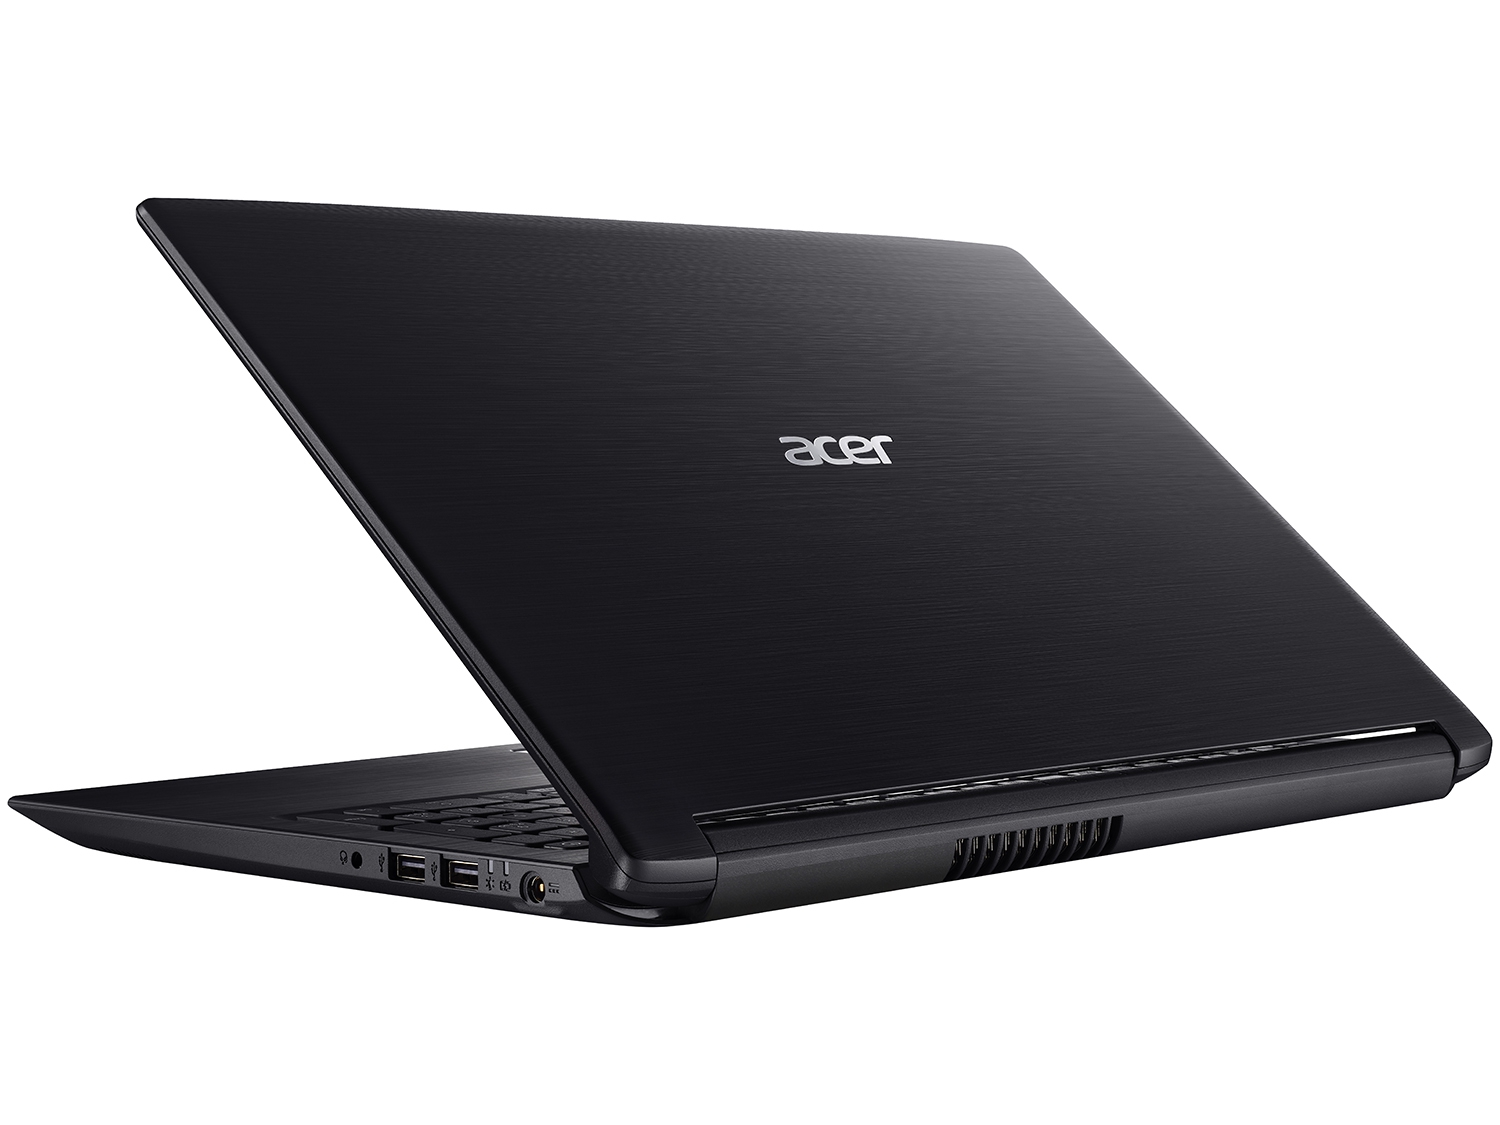 Notebook Acer A315 Core I3 8130u Memoria 8gb Hd 1tb Tela 15.6" Linux